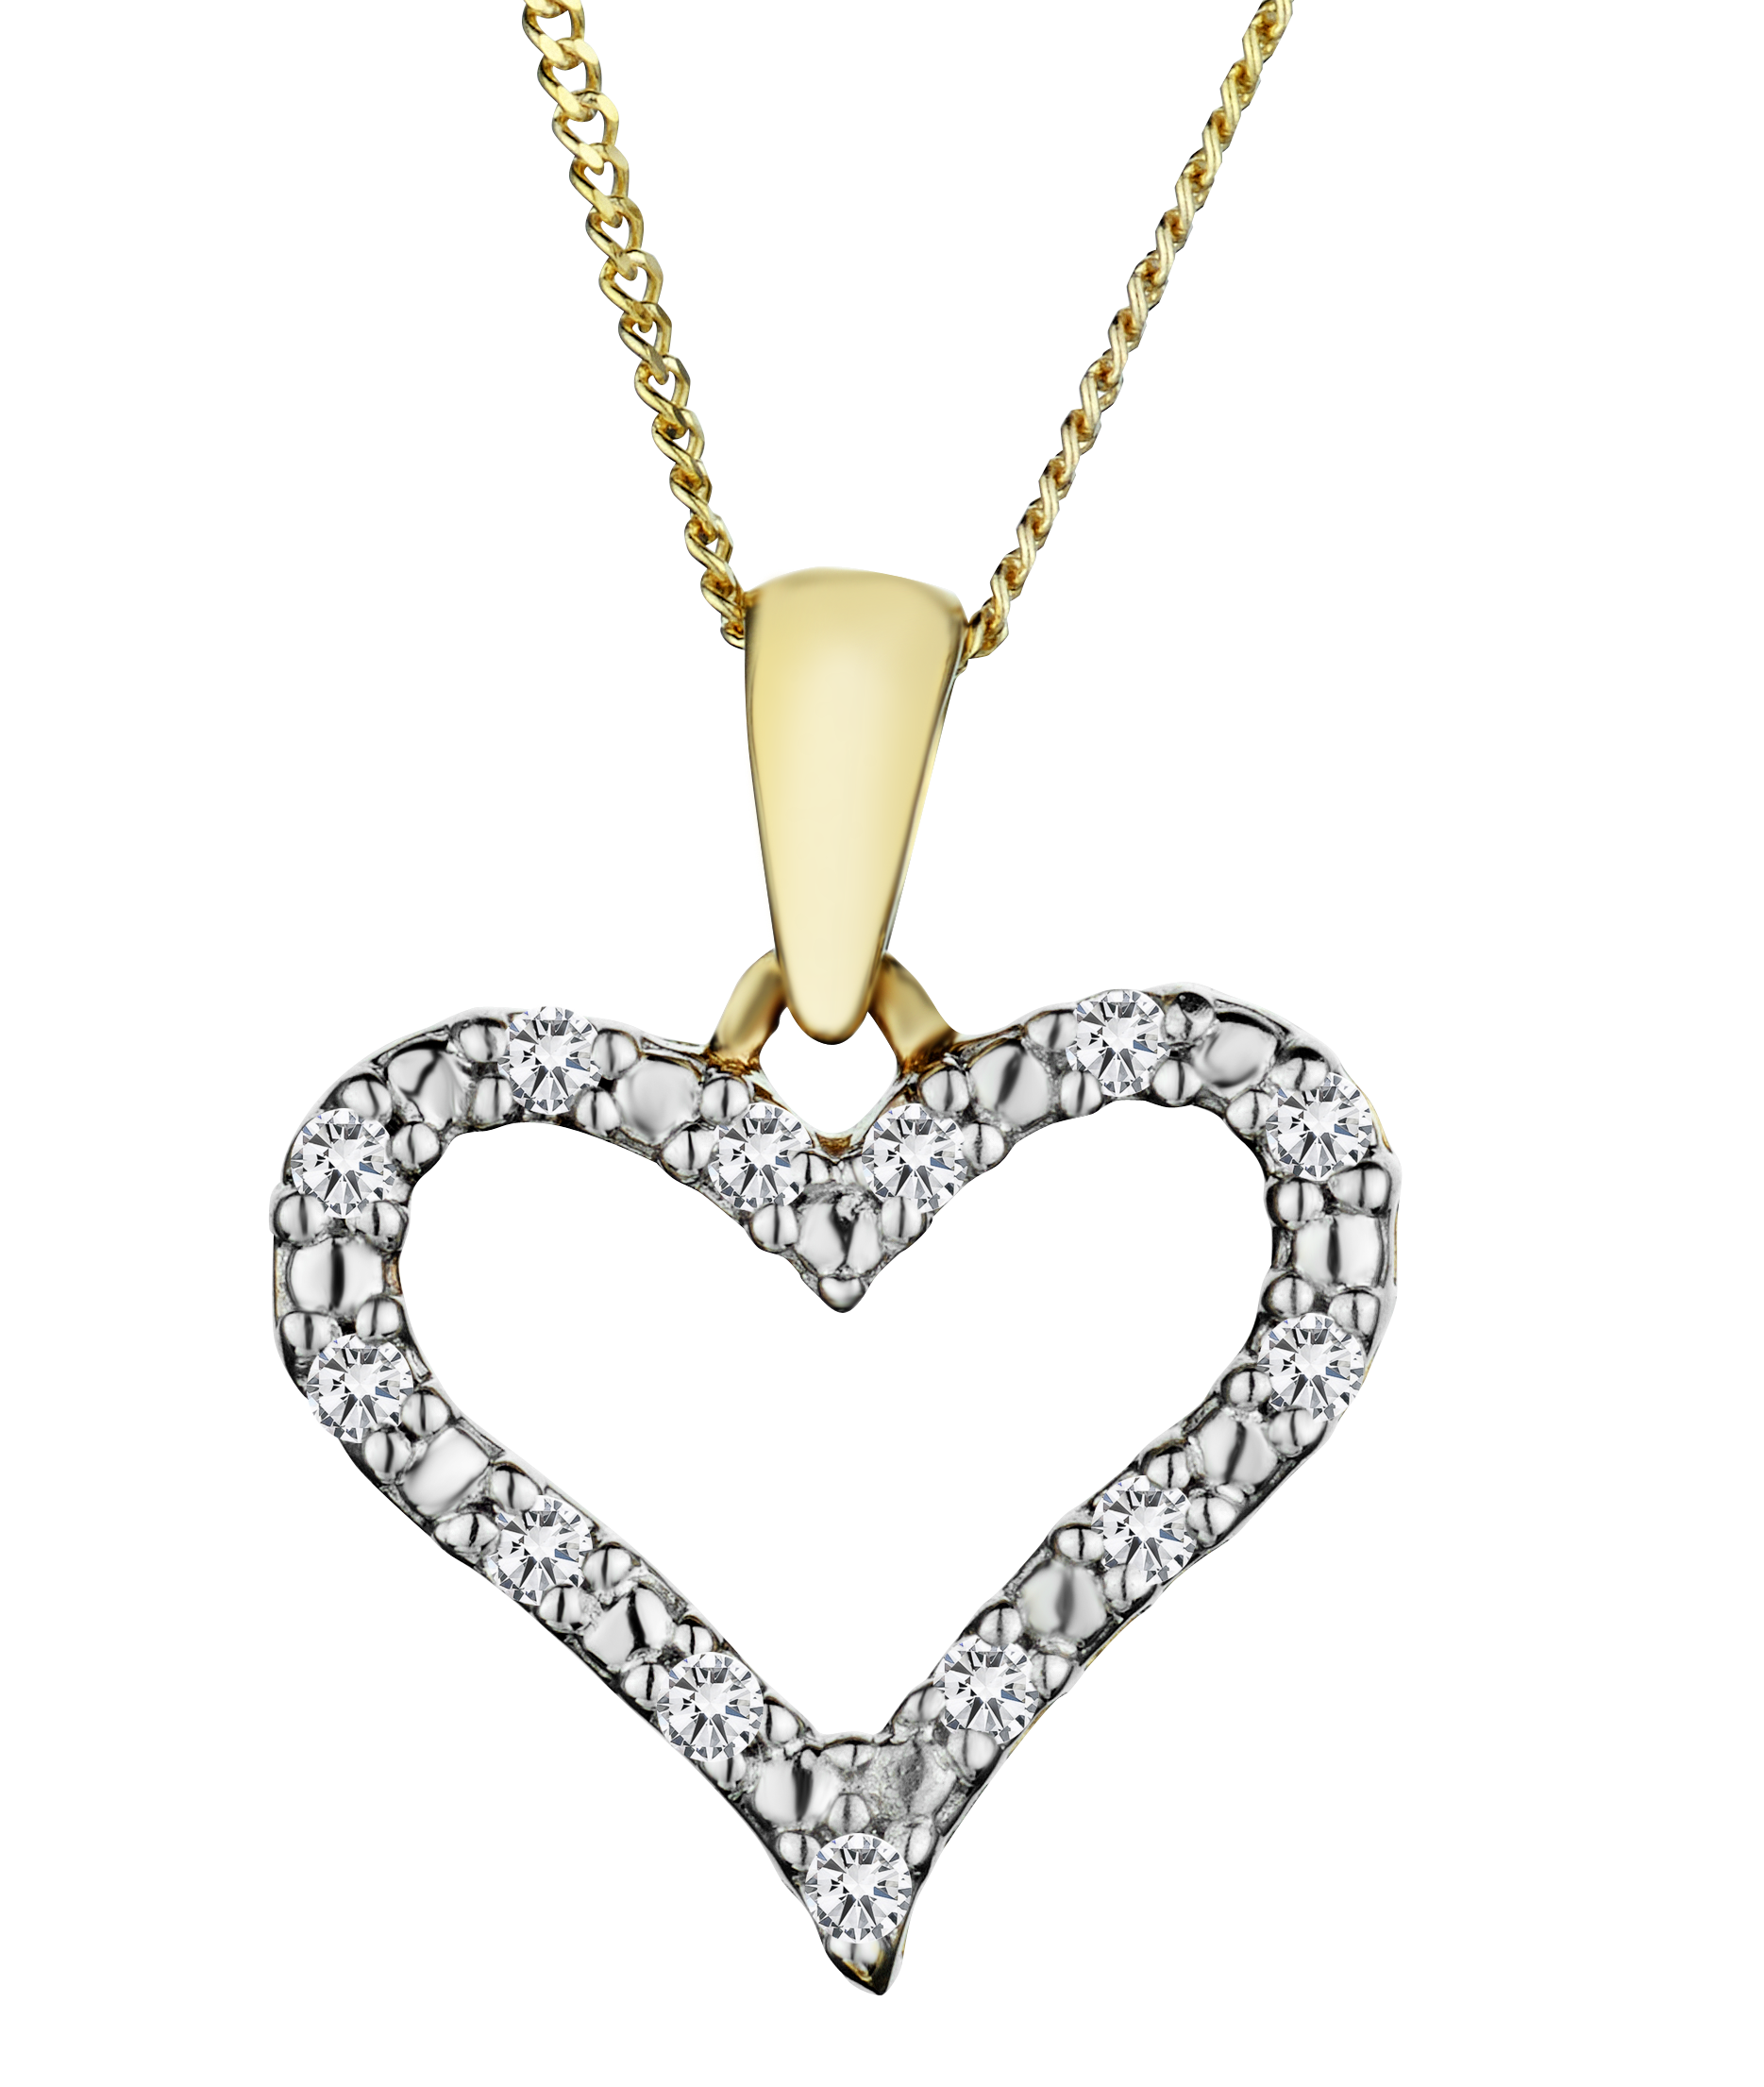 .09 Carat of Diamonds Heart Pendant, 10kt Yellow Gold.....................NOW